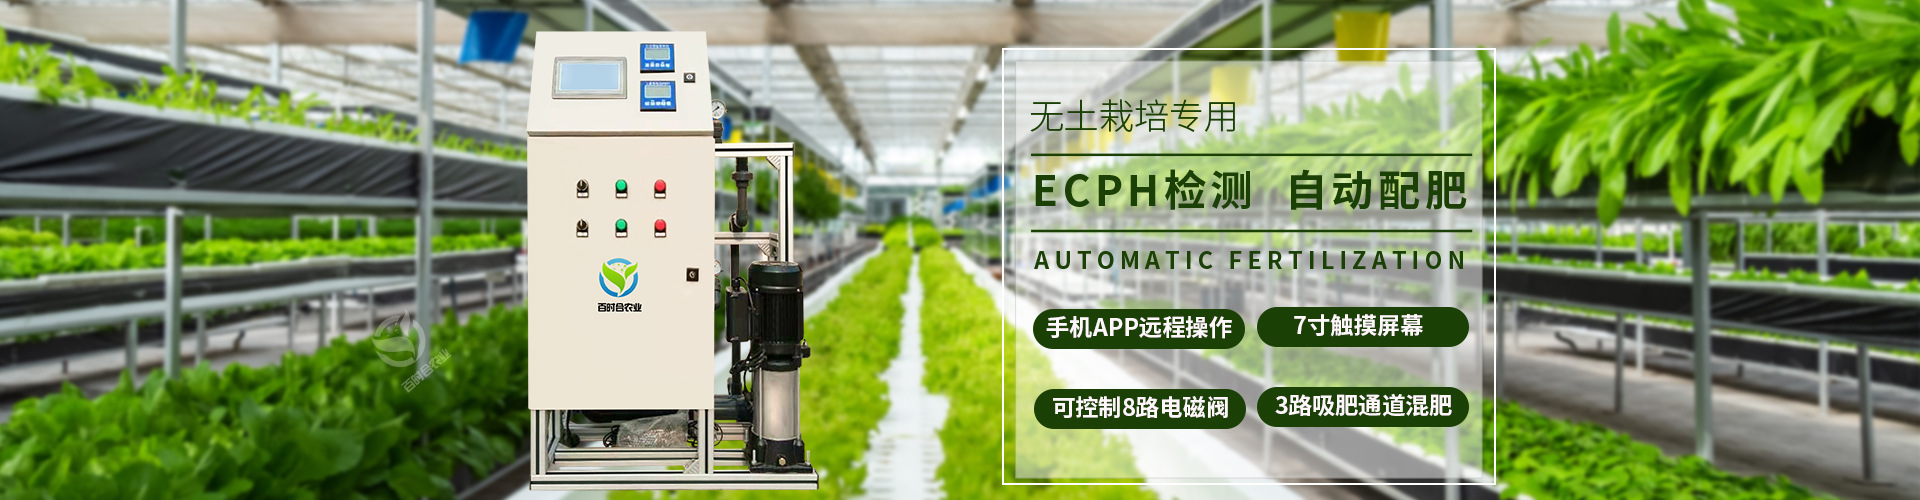 ECPH自动配肥智能施肥机厂家